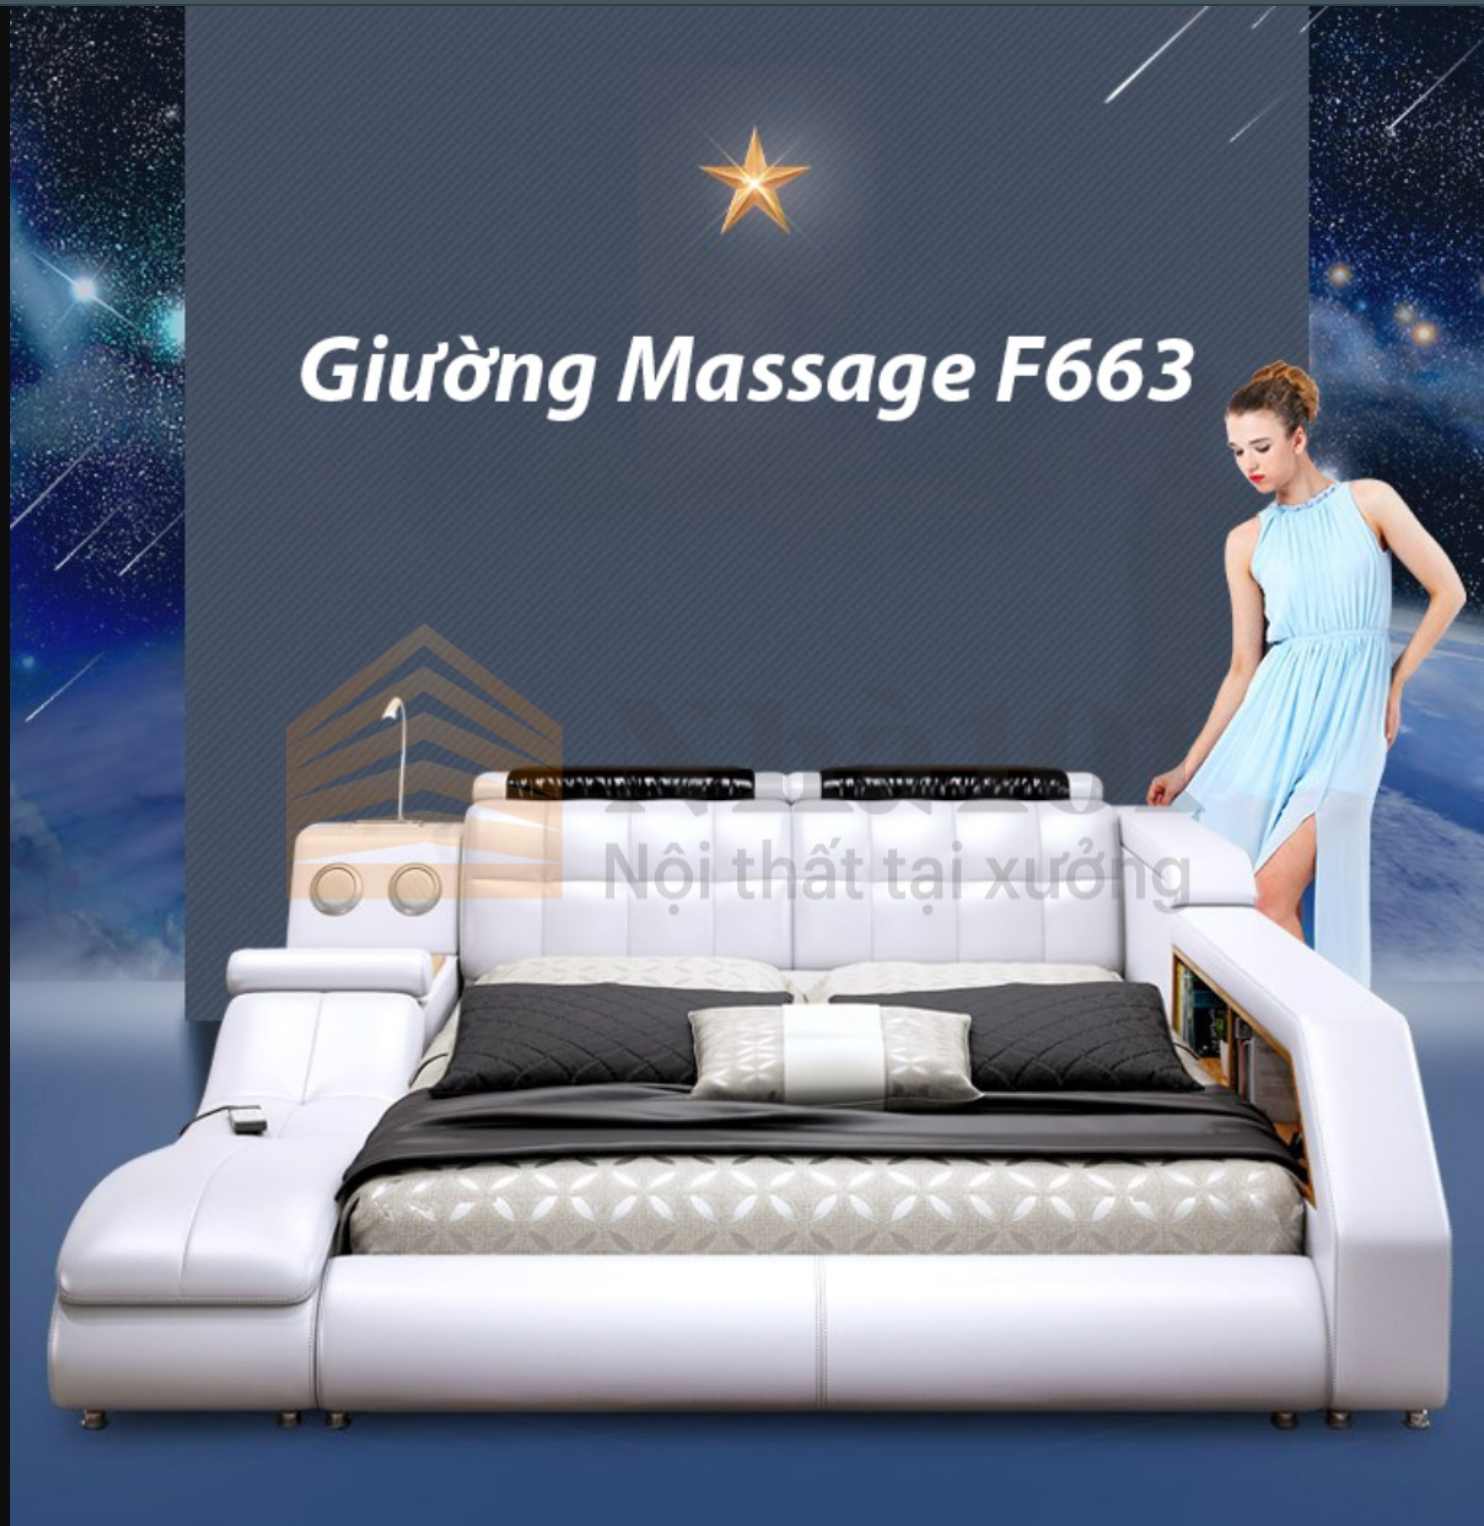 Giường Massage F663, giường massage, giường massage tiện nghi 1